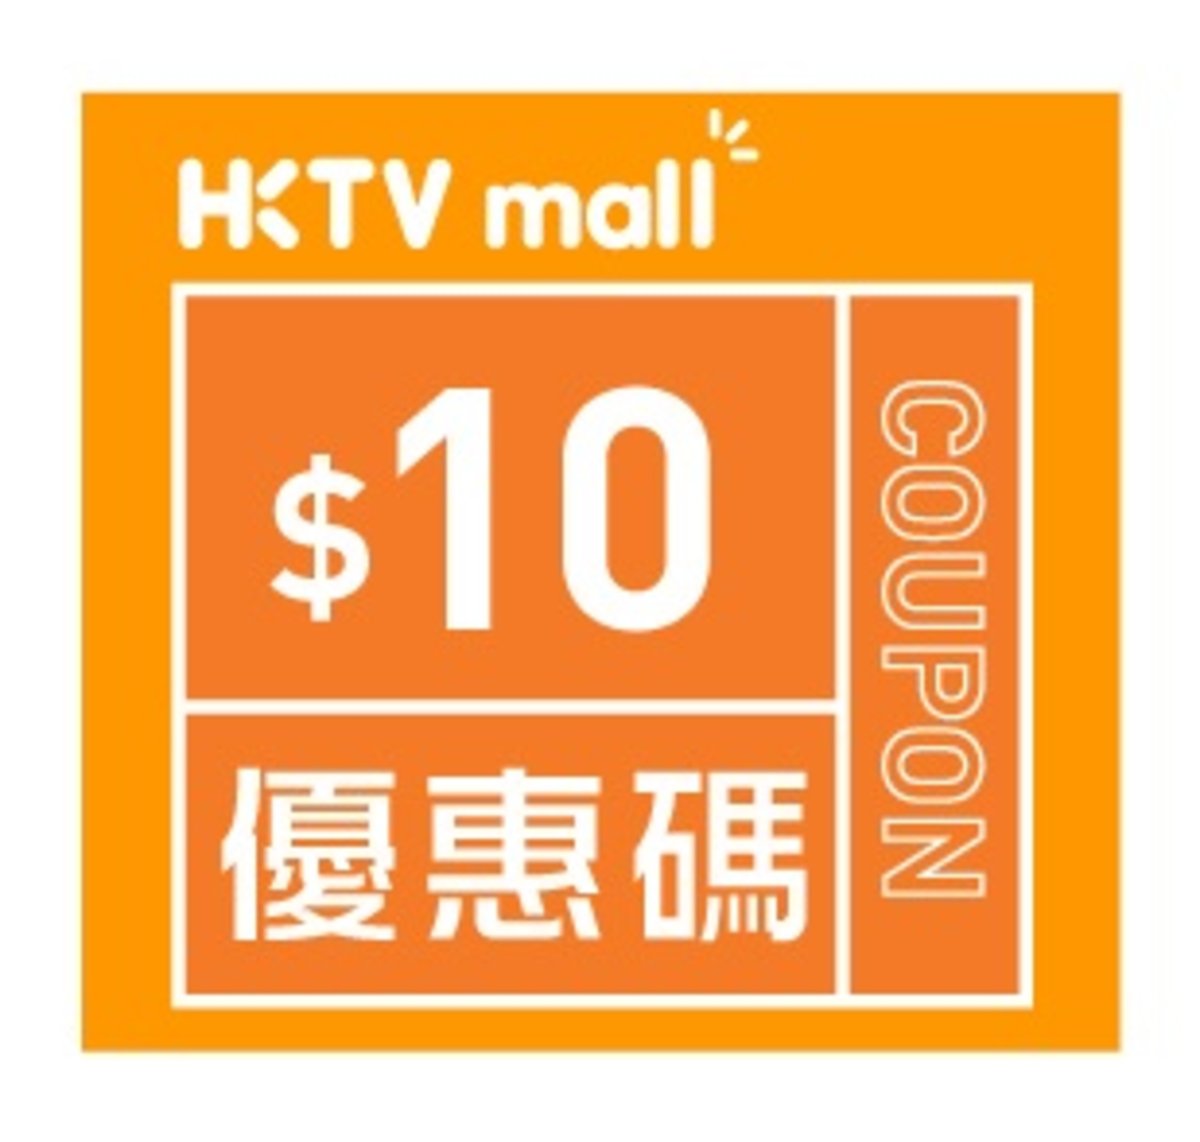 HKTVmall $10 Coupon Code  [Valid: 2020.06.11 - 2020.07.31]